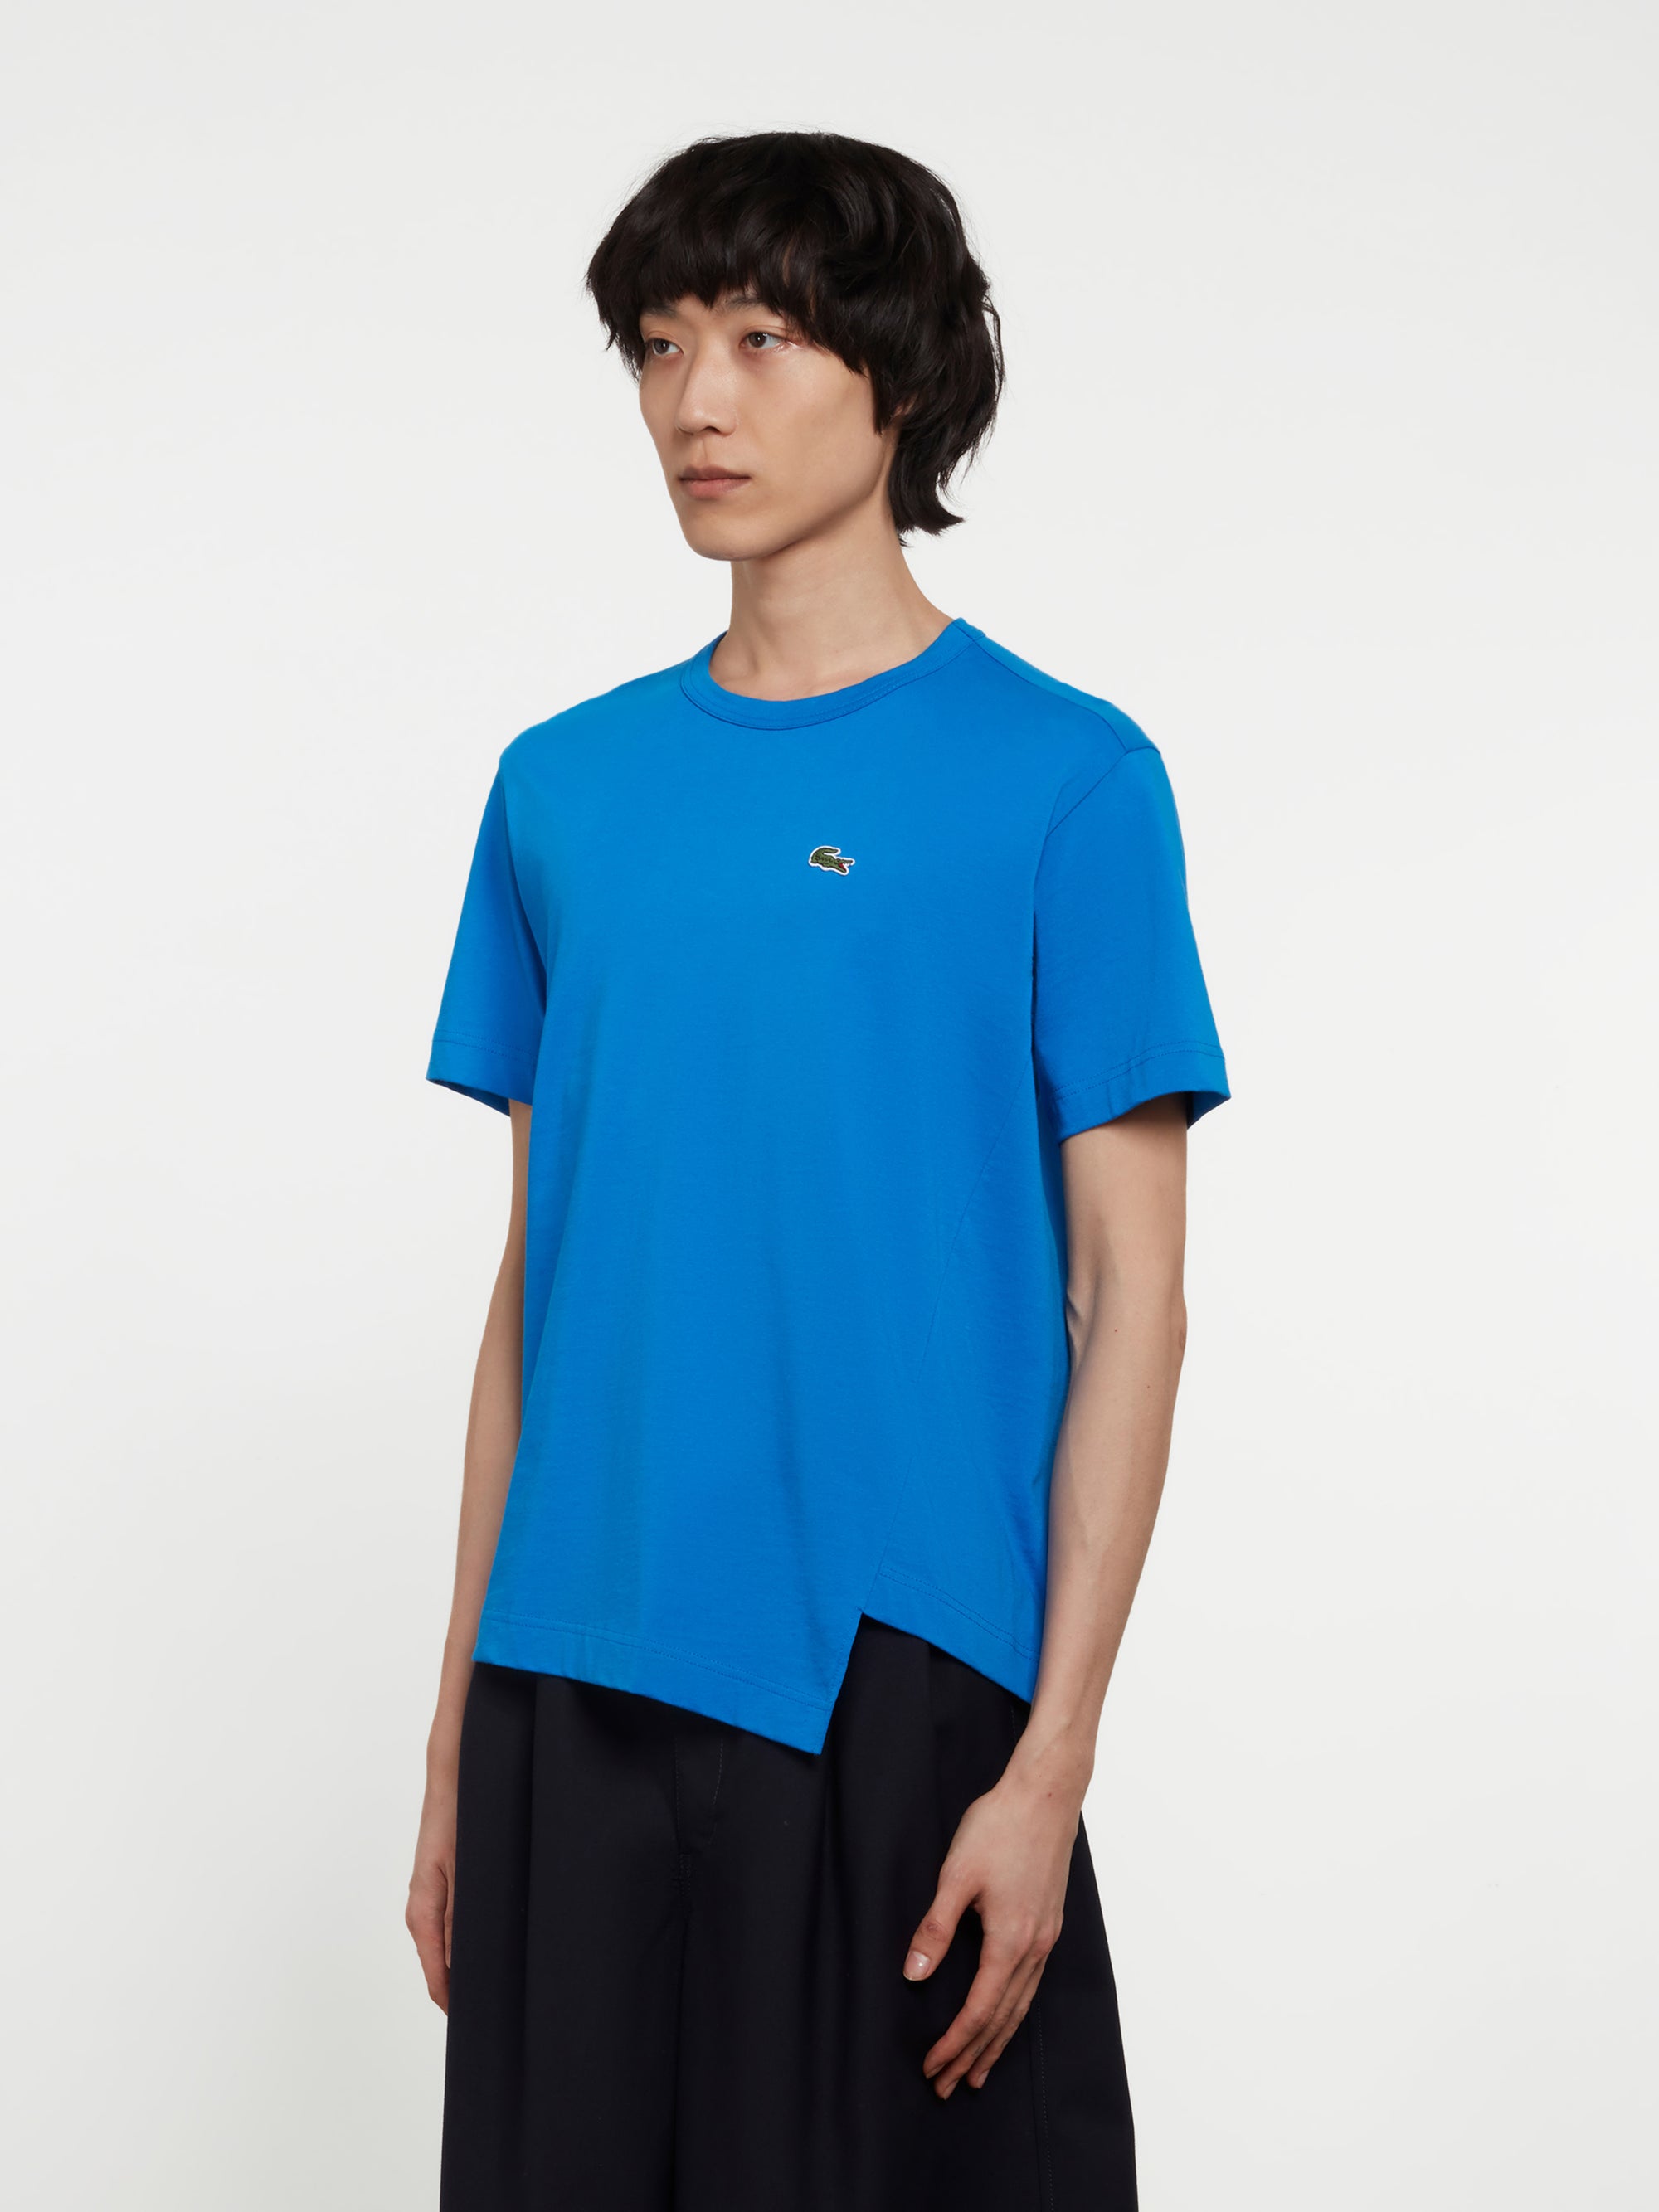 CDG Shirt - Lacoste Men’s T-Shirt - (Blue) view 2